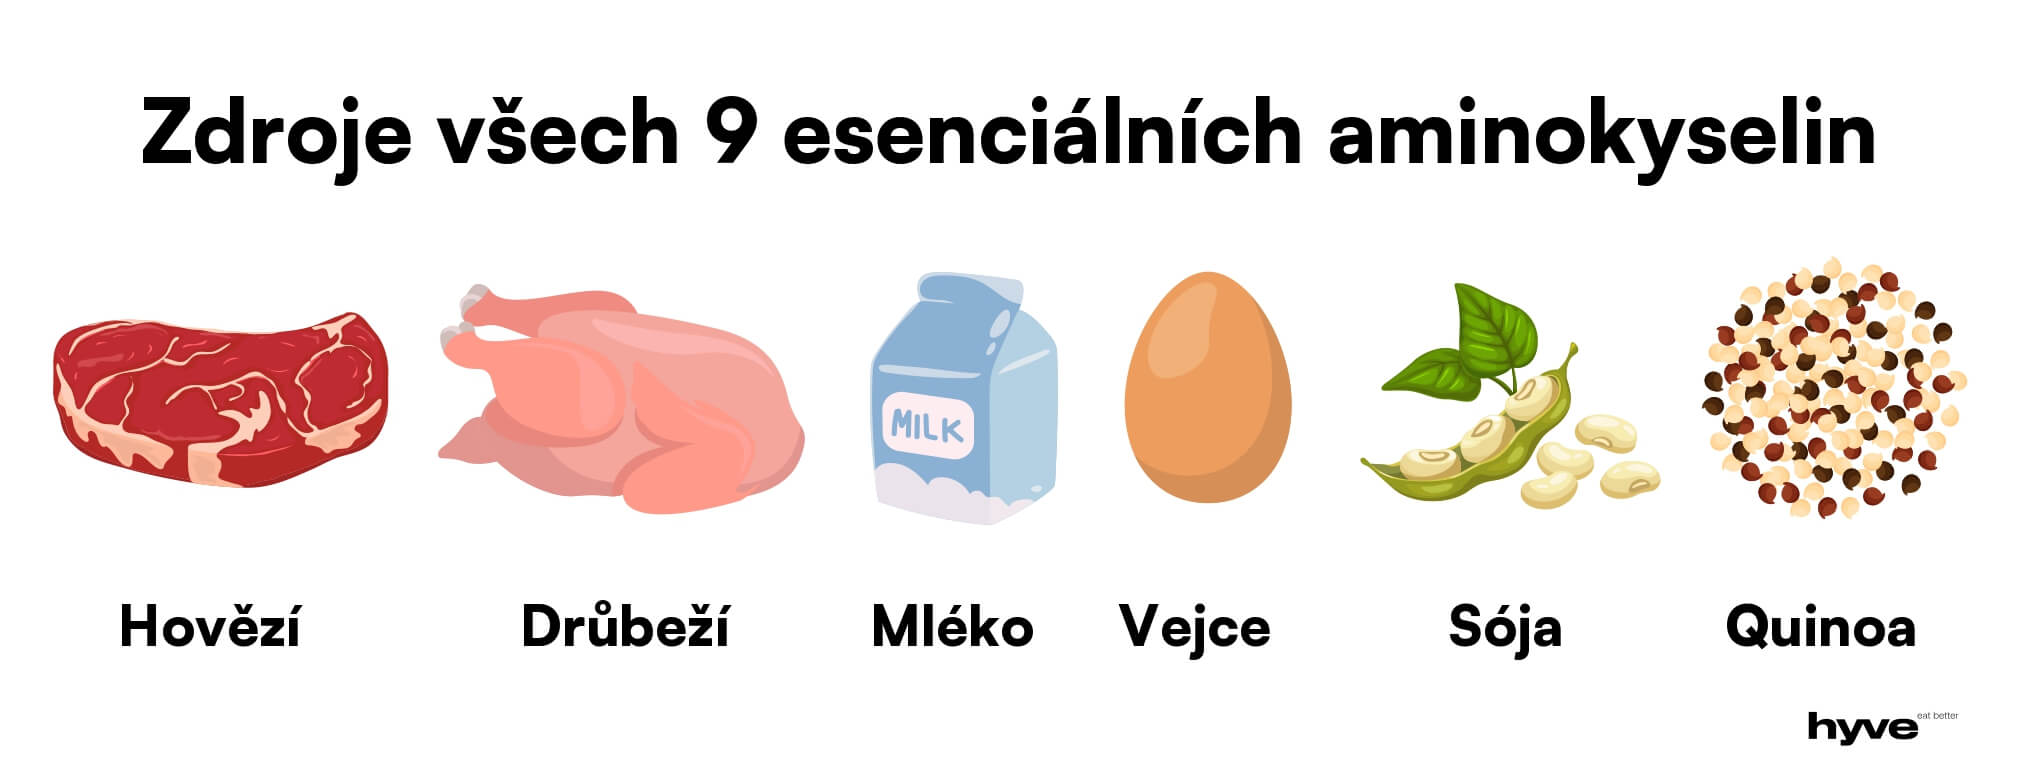 Potravinové zdroje všech 9 esenciálních aminokyselin.